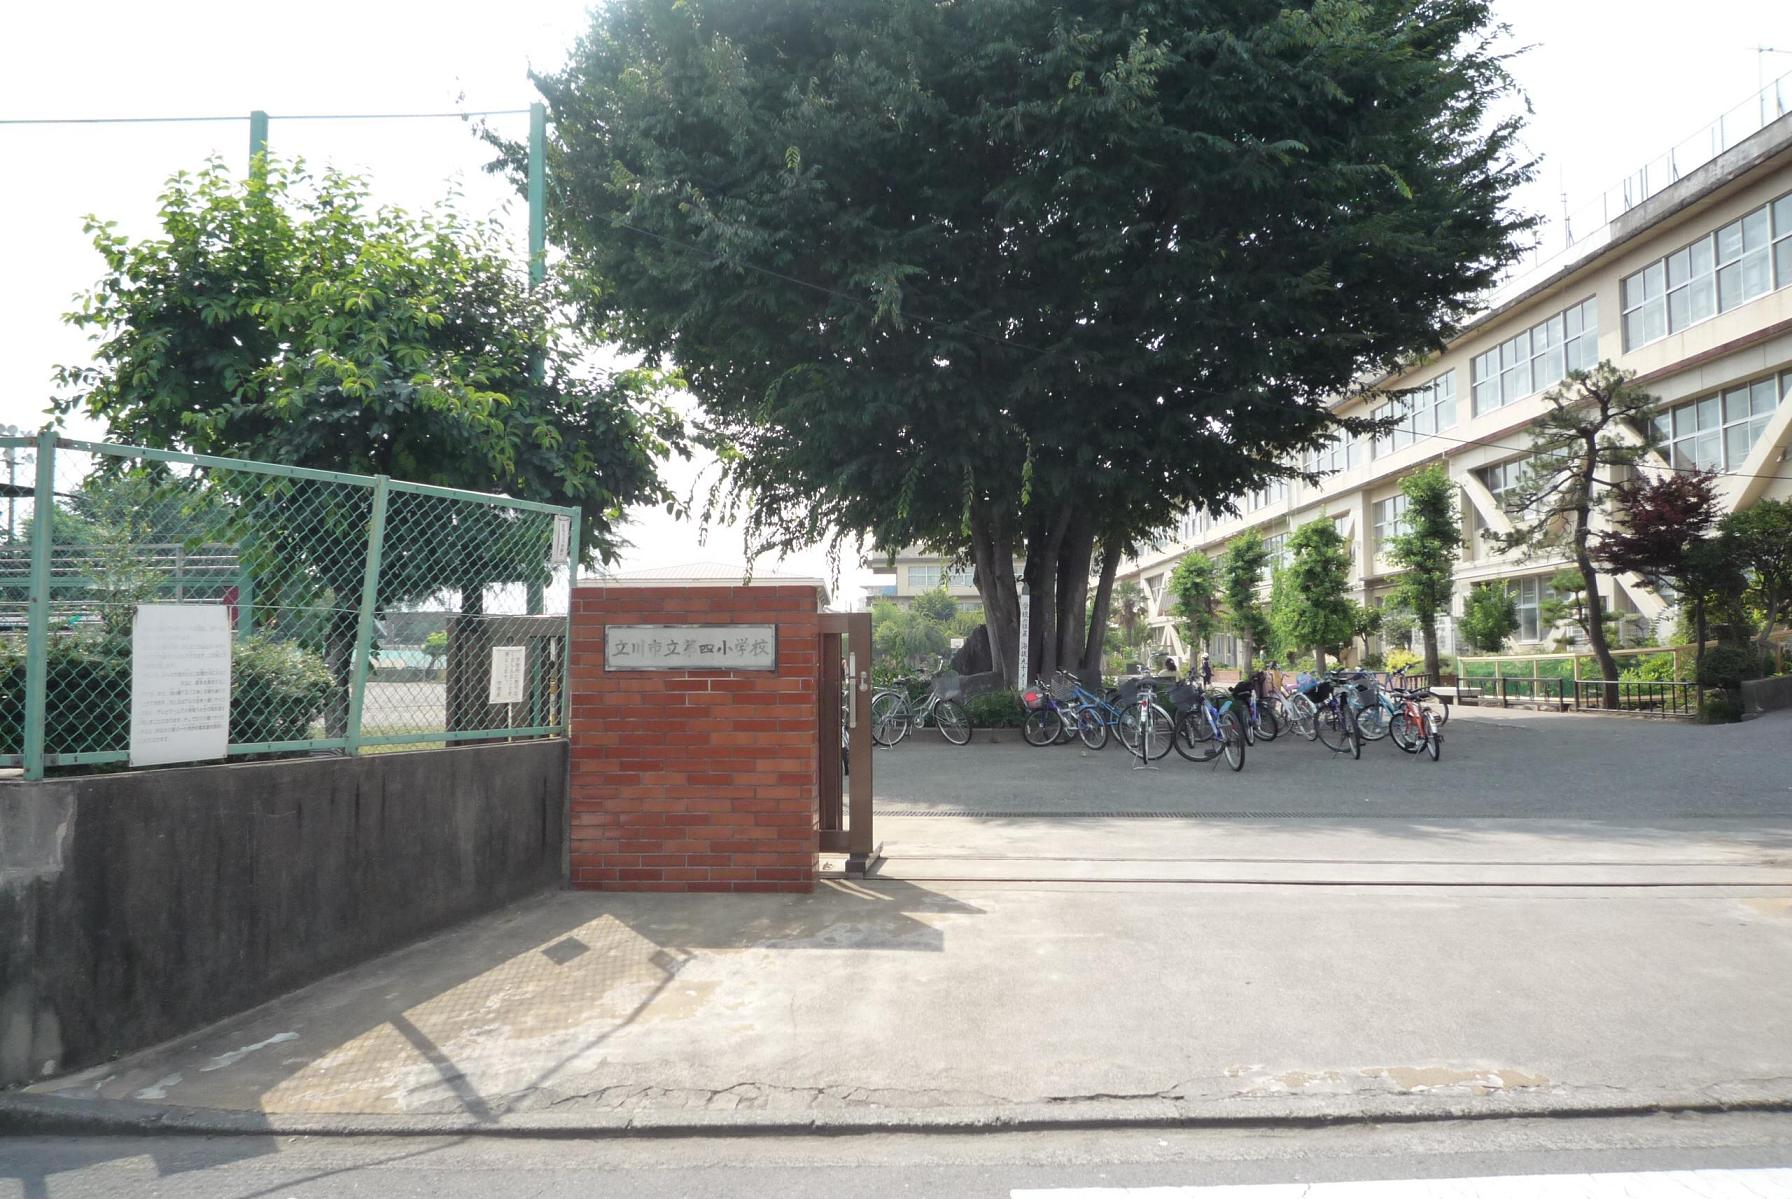 Primary school. 118m to Tachikawa fourth elementary school (elementary school)